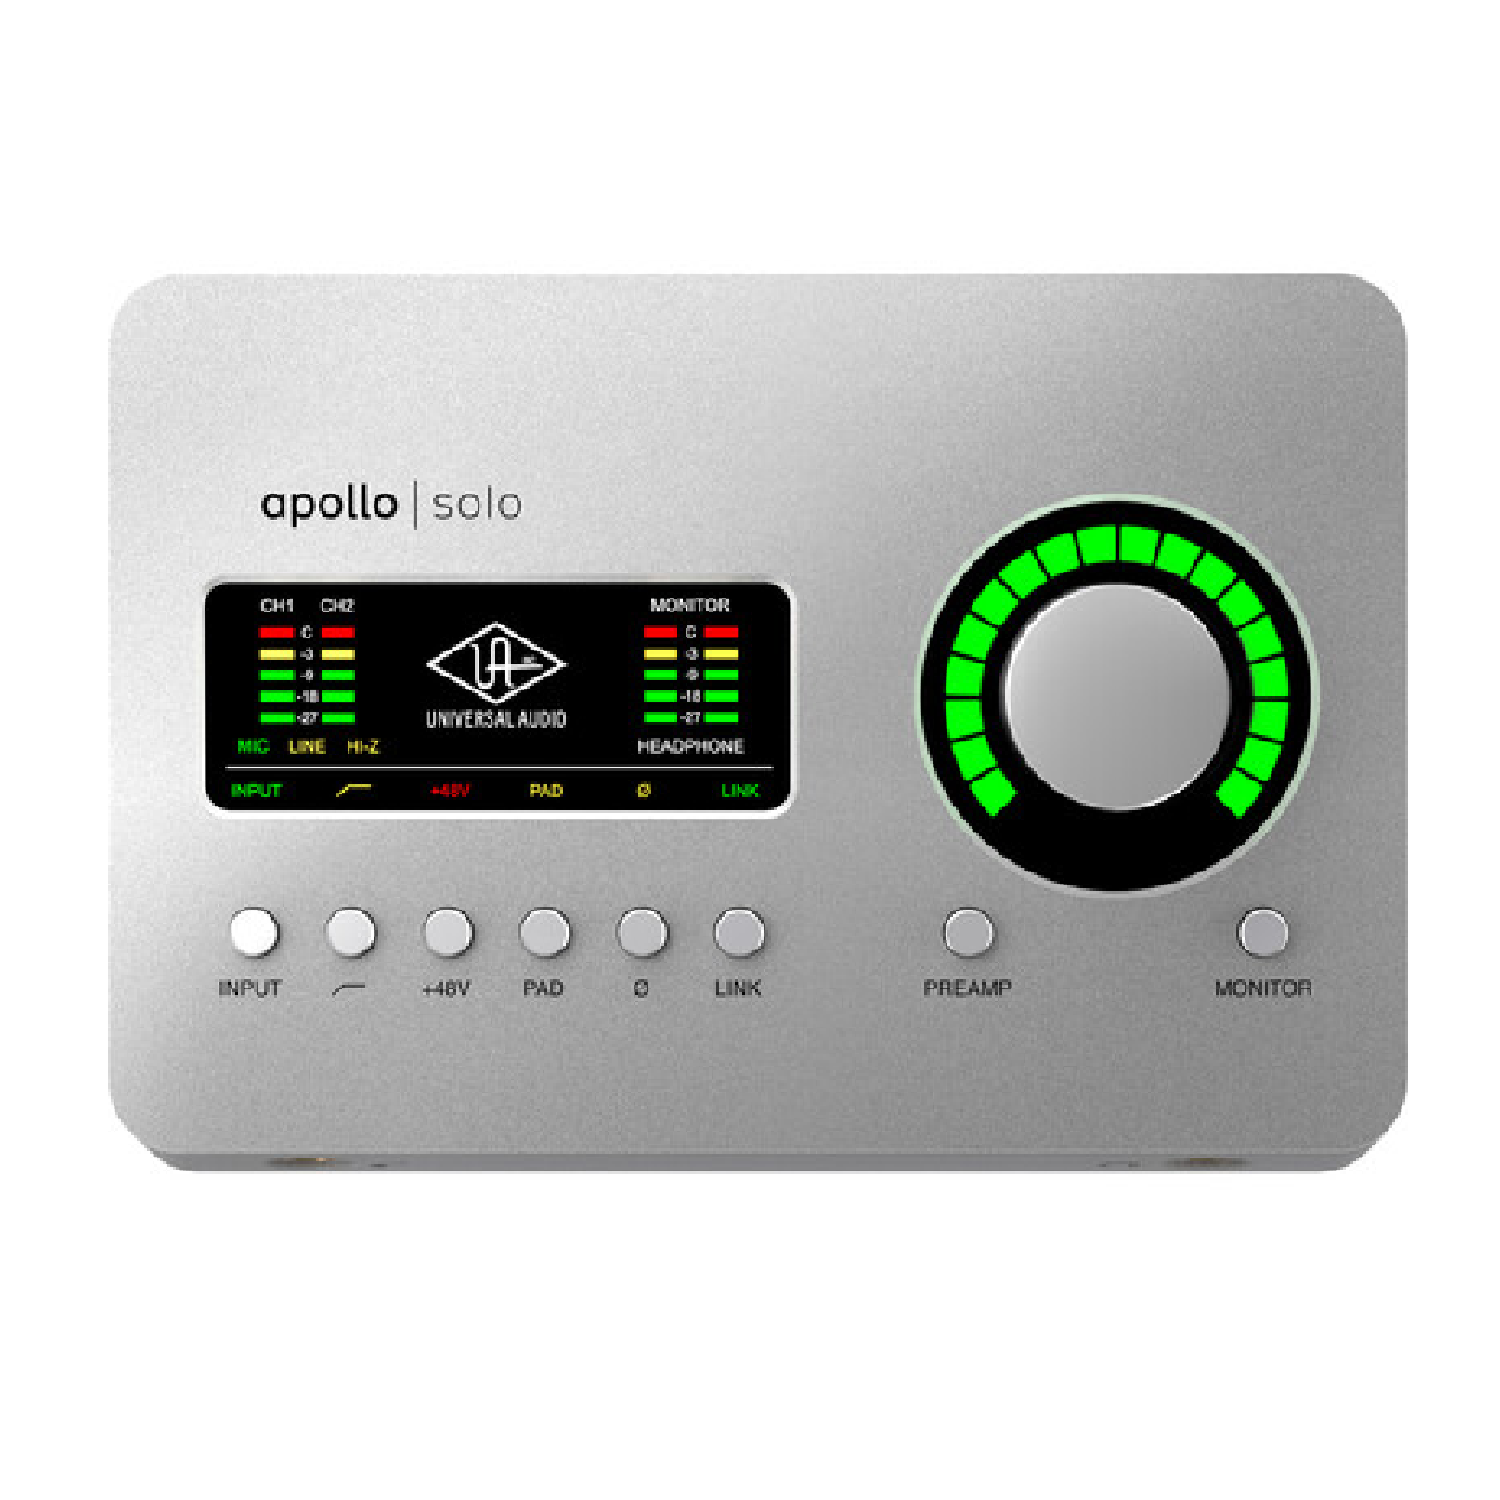 Apollo Solo Desktop 2x4 Thunderbolt 3 Audio Interface with Real-Time UAD Processing   Apollo Solo universal audio